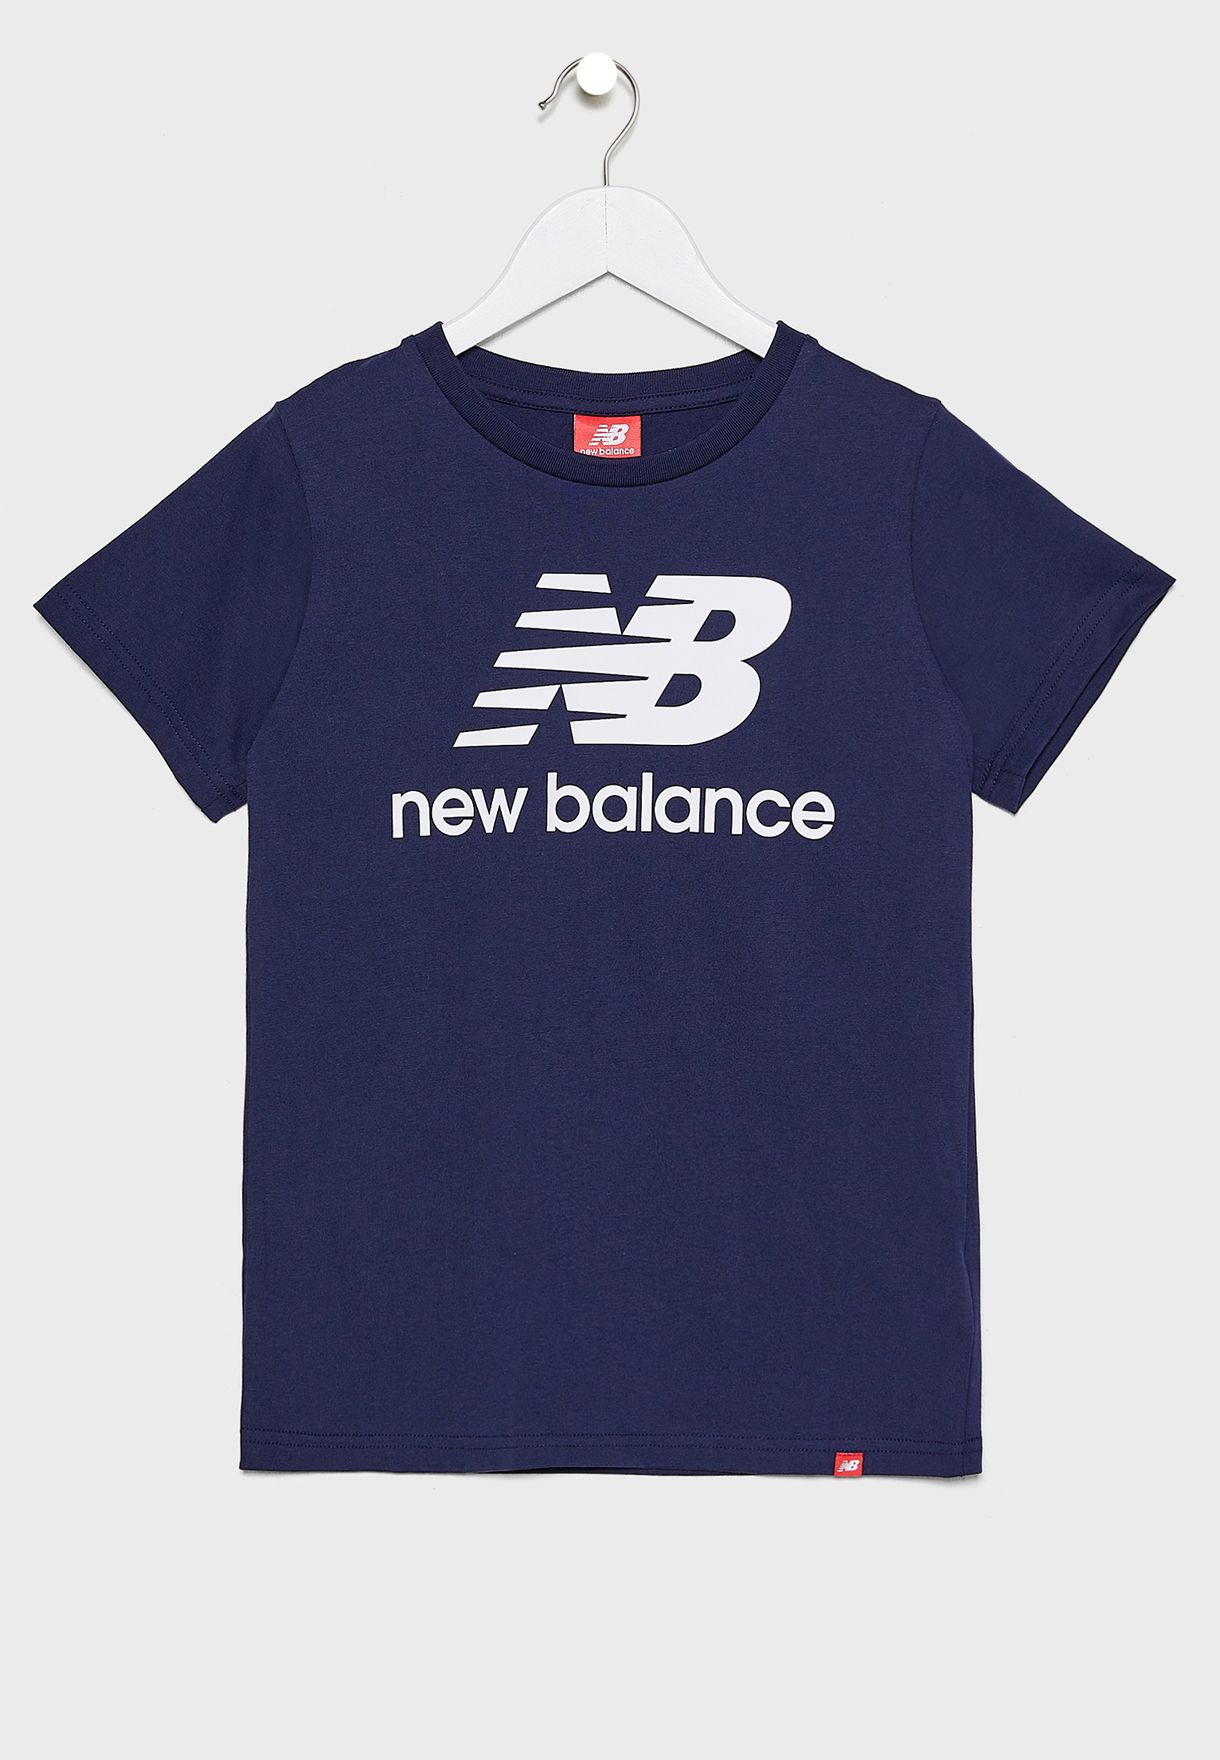 new balance kids clothes